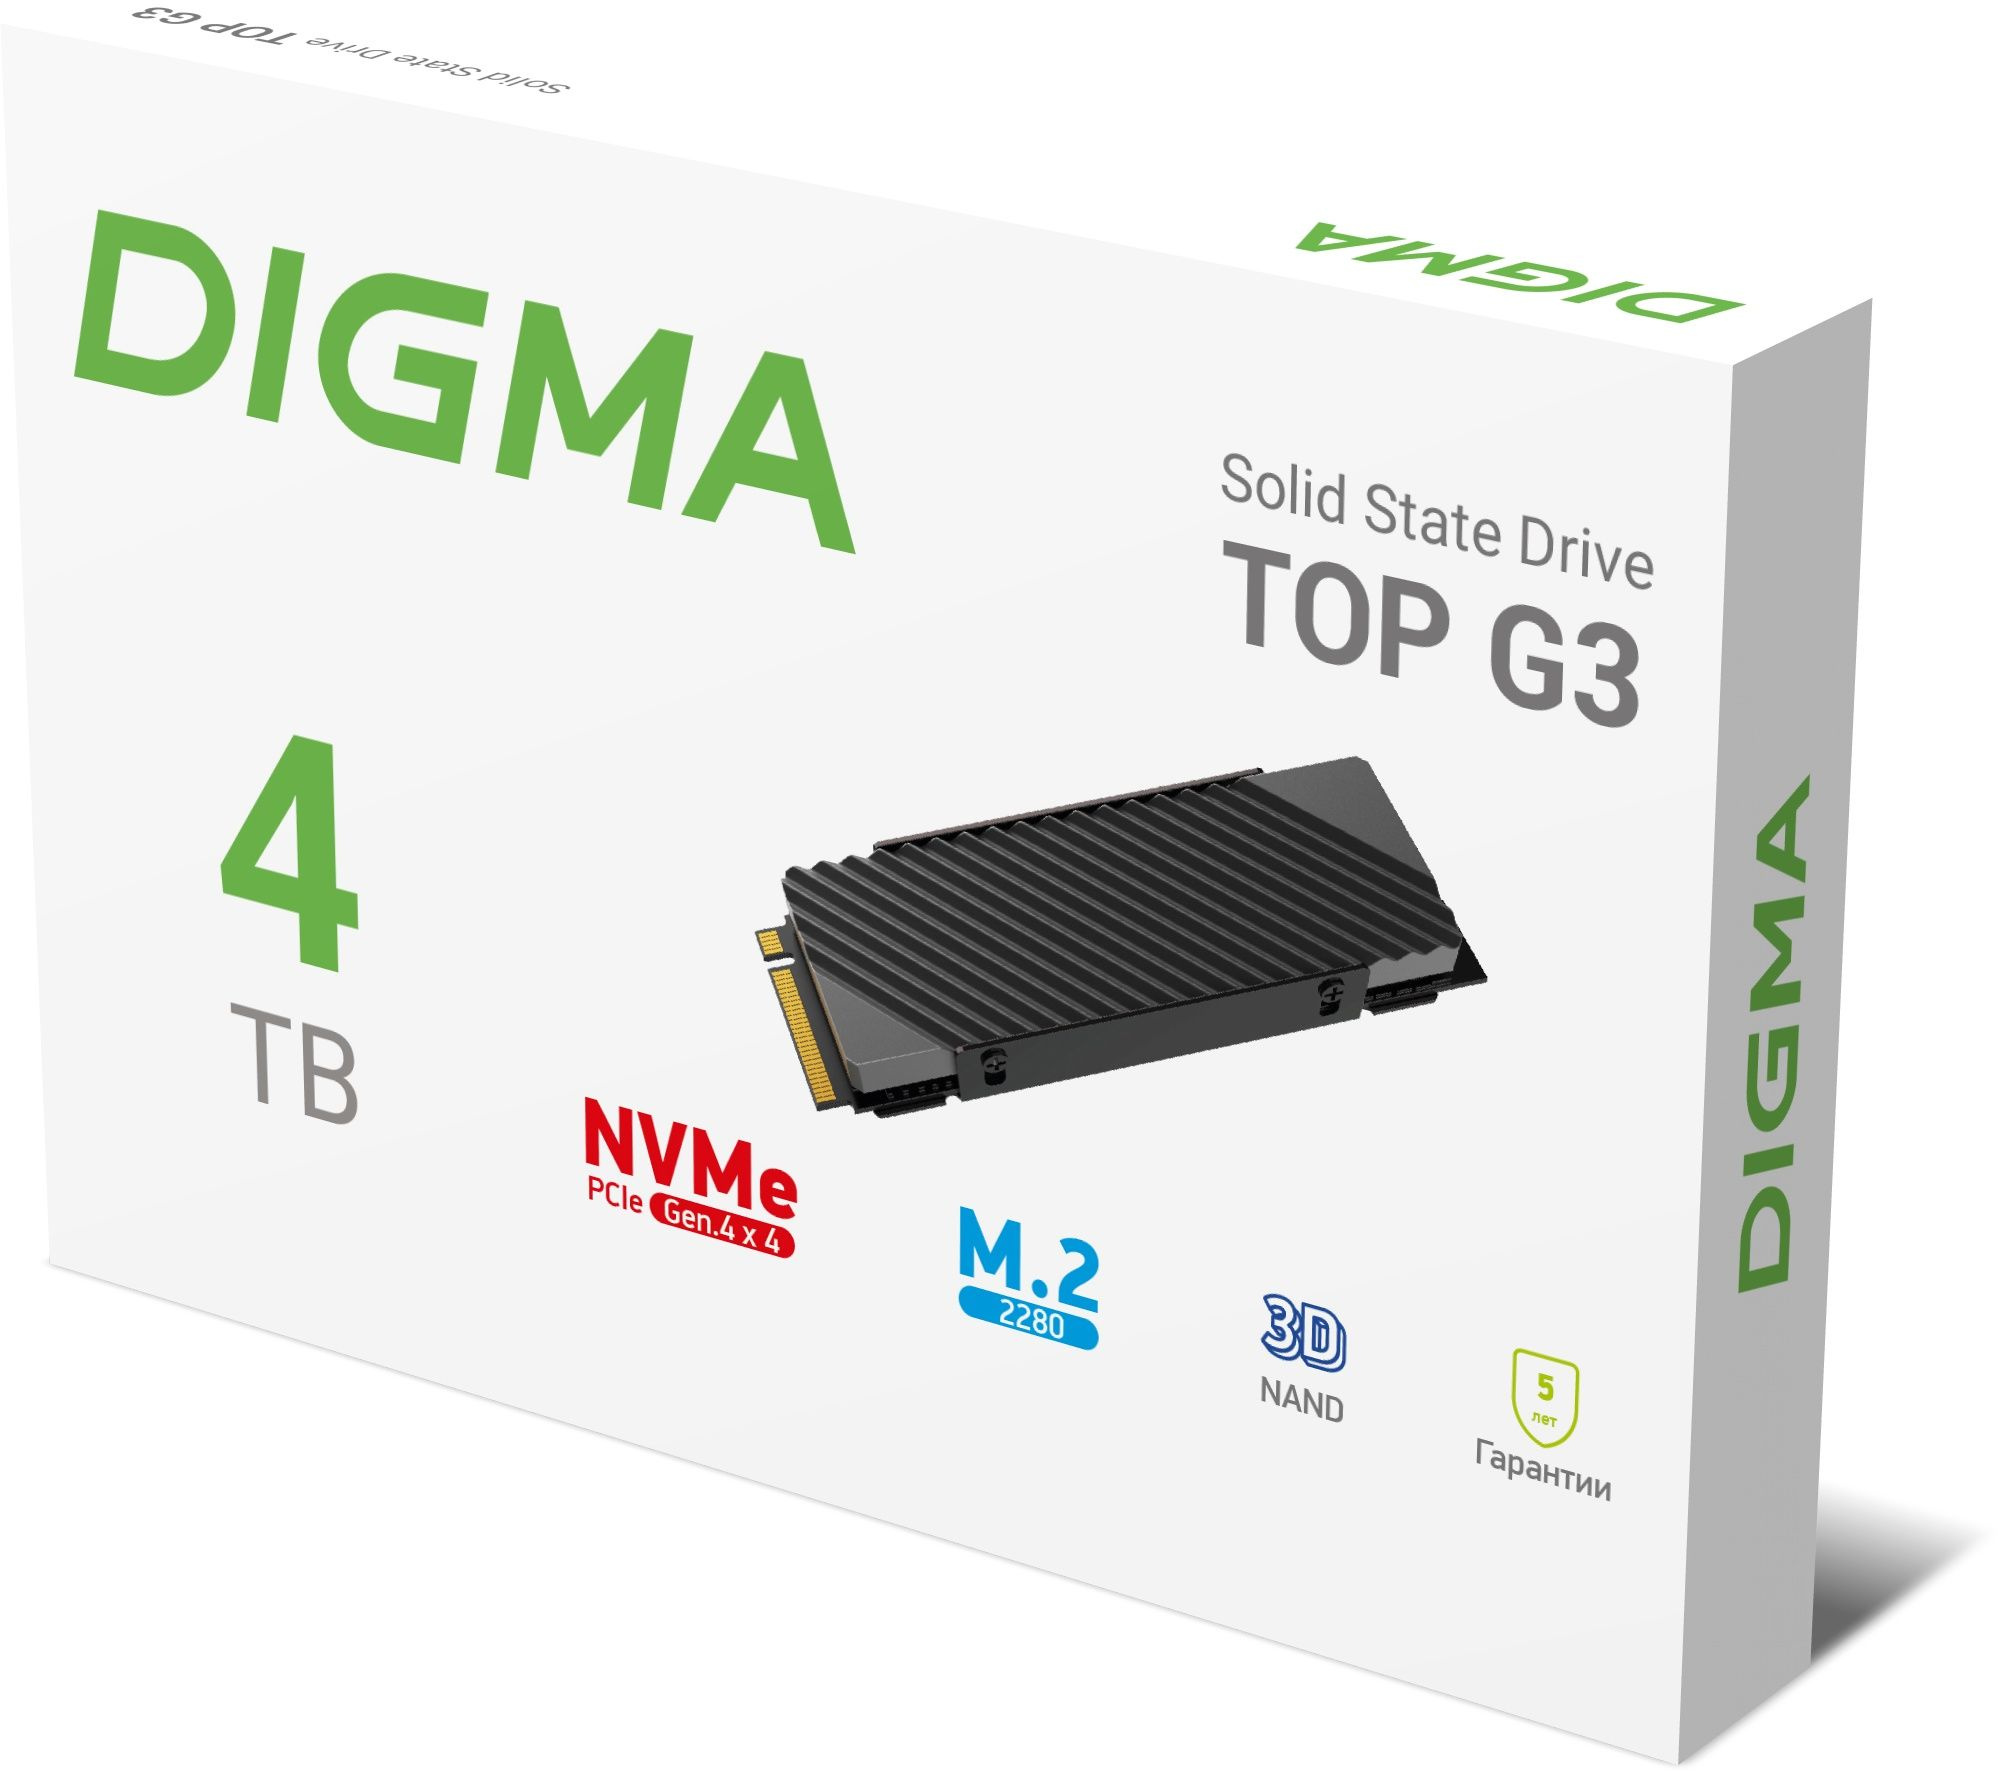 SSD  Digma Top G3 DGST4004TG33T 4, M.2 2280, PCIe 4.0 x4,  NVMe,  M.2,  rtl